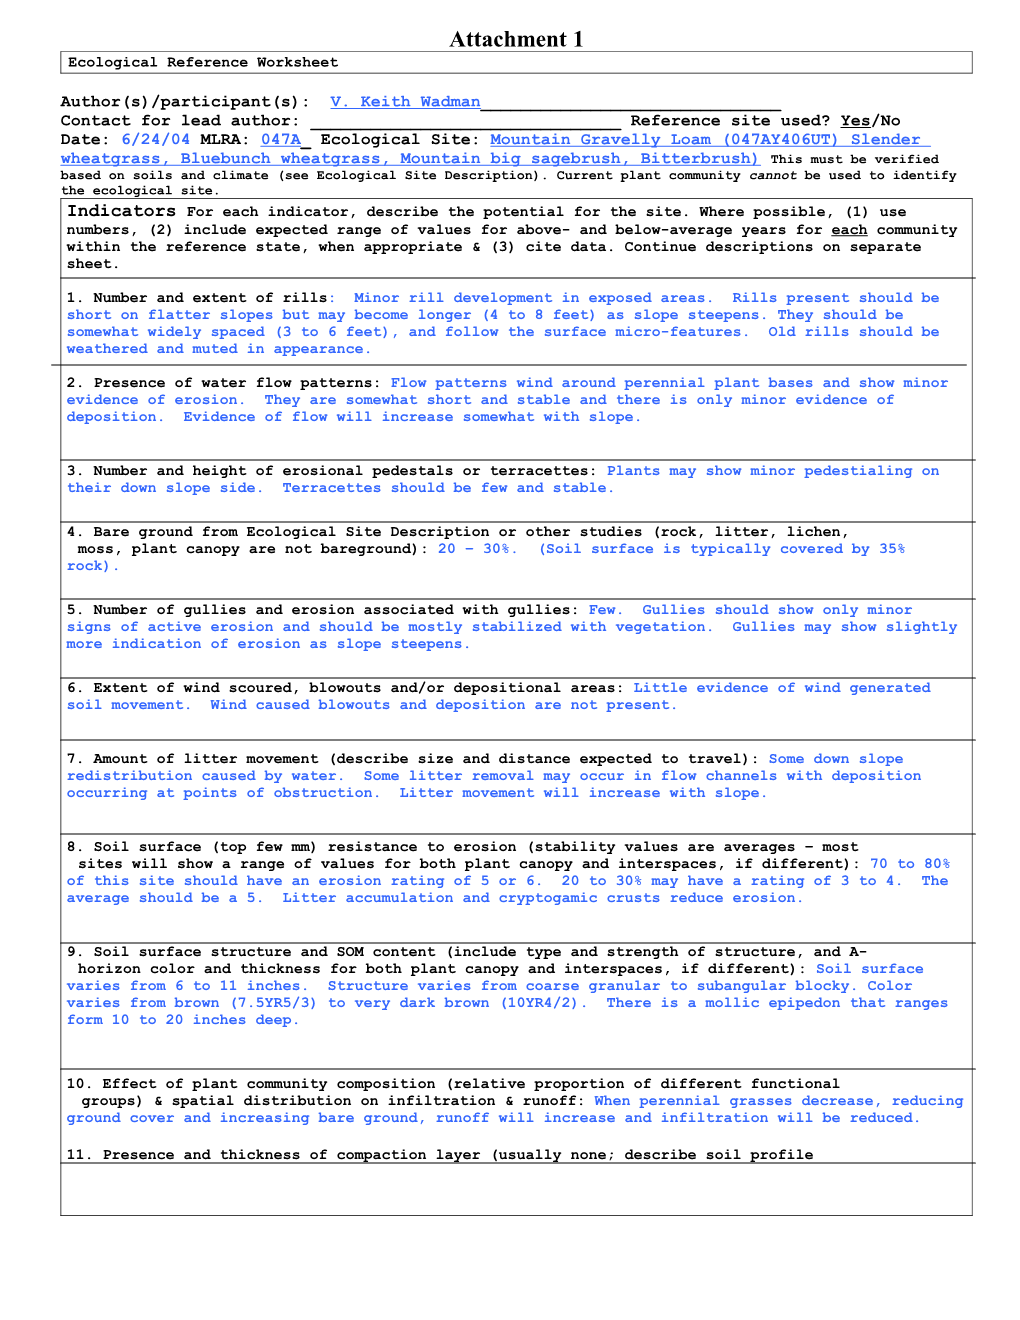 Ecological Reference Worksheet s5